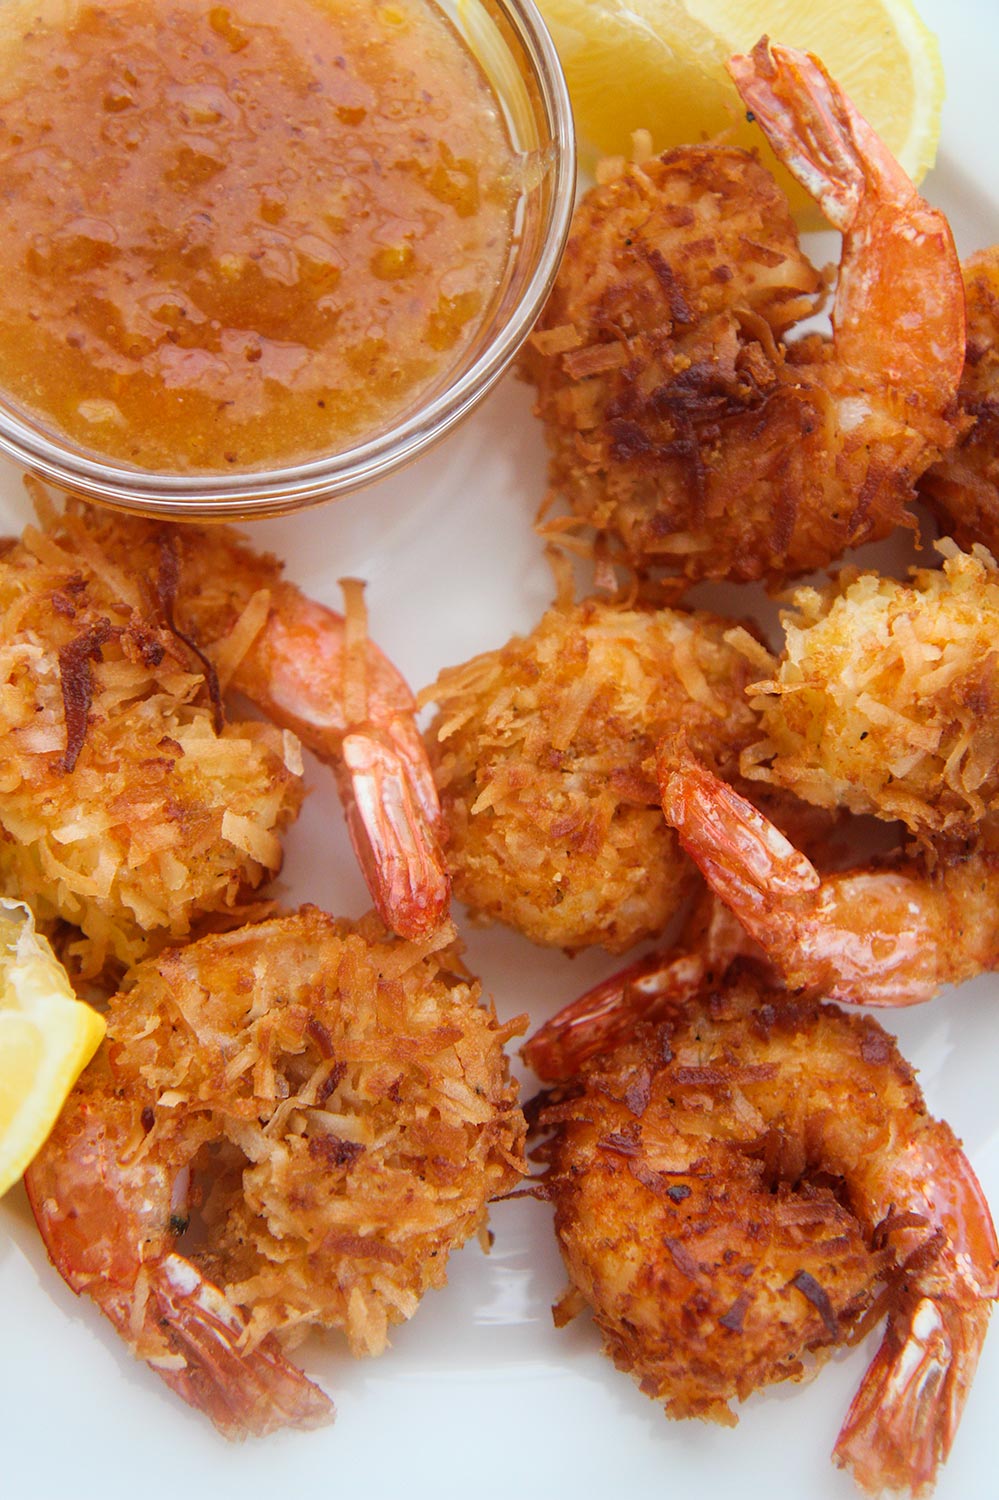 six fried coconut shrimp with orange sauce and lemon wedges on the side.